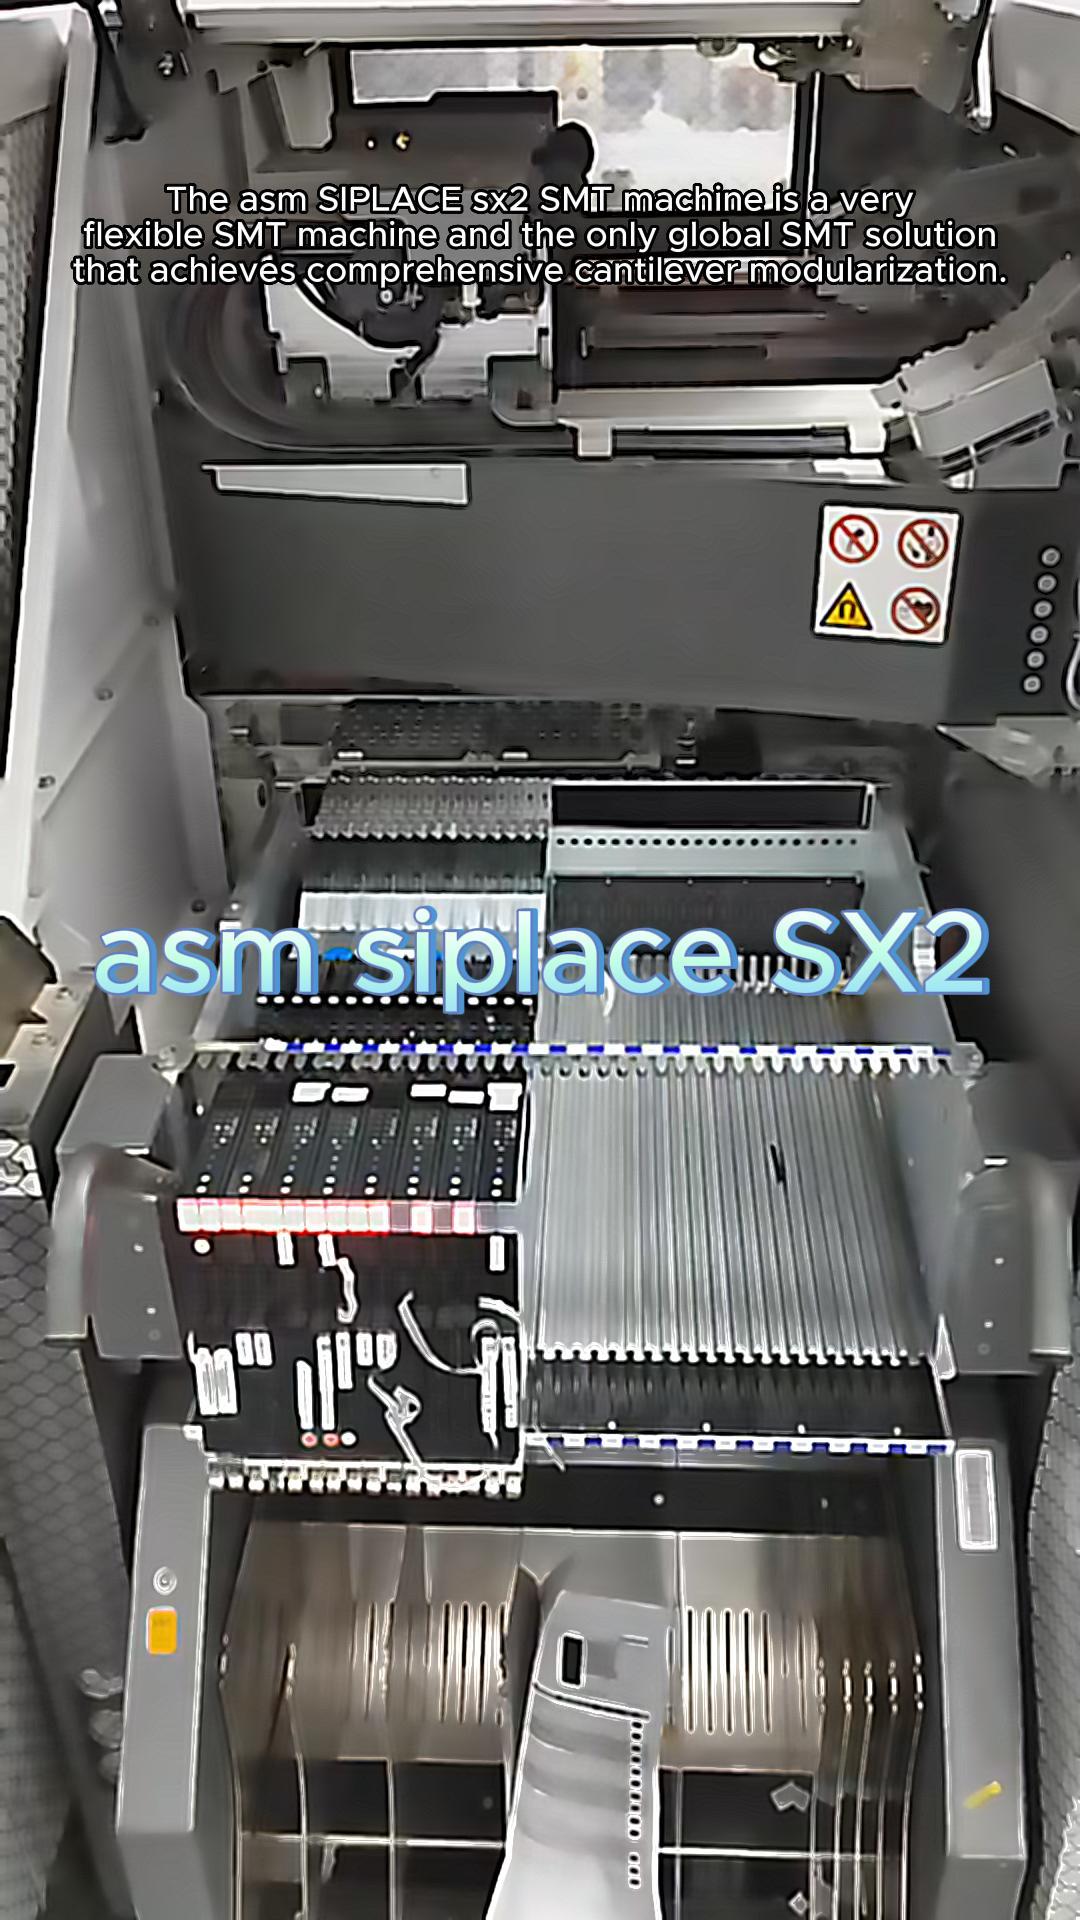 smt high speed siemens mounter placement machine asm siplace x2s equipment characteristics